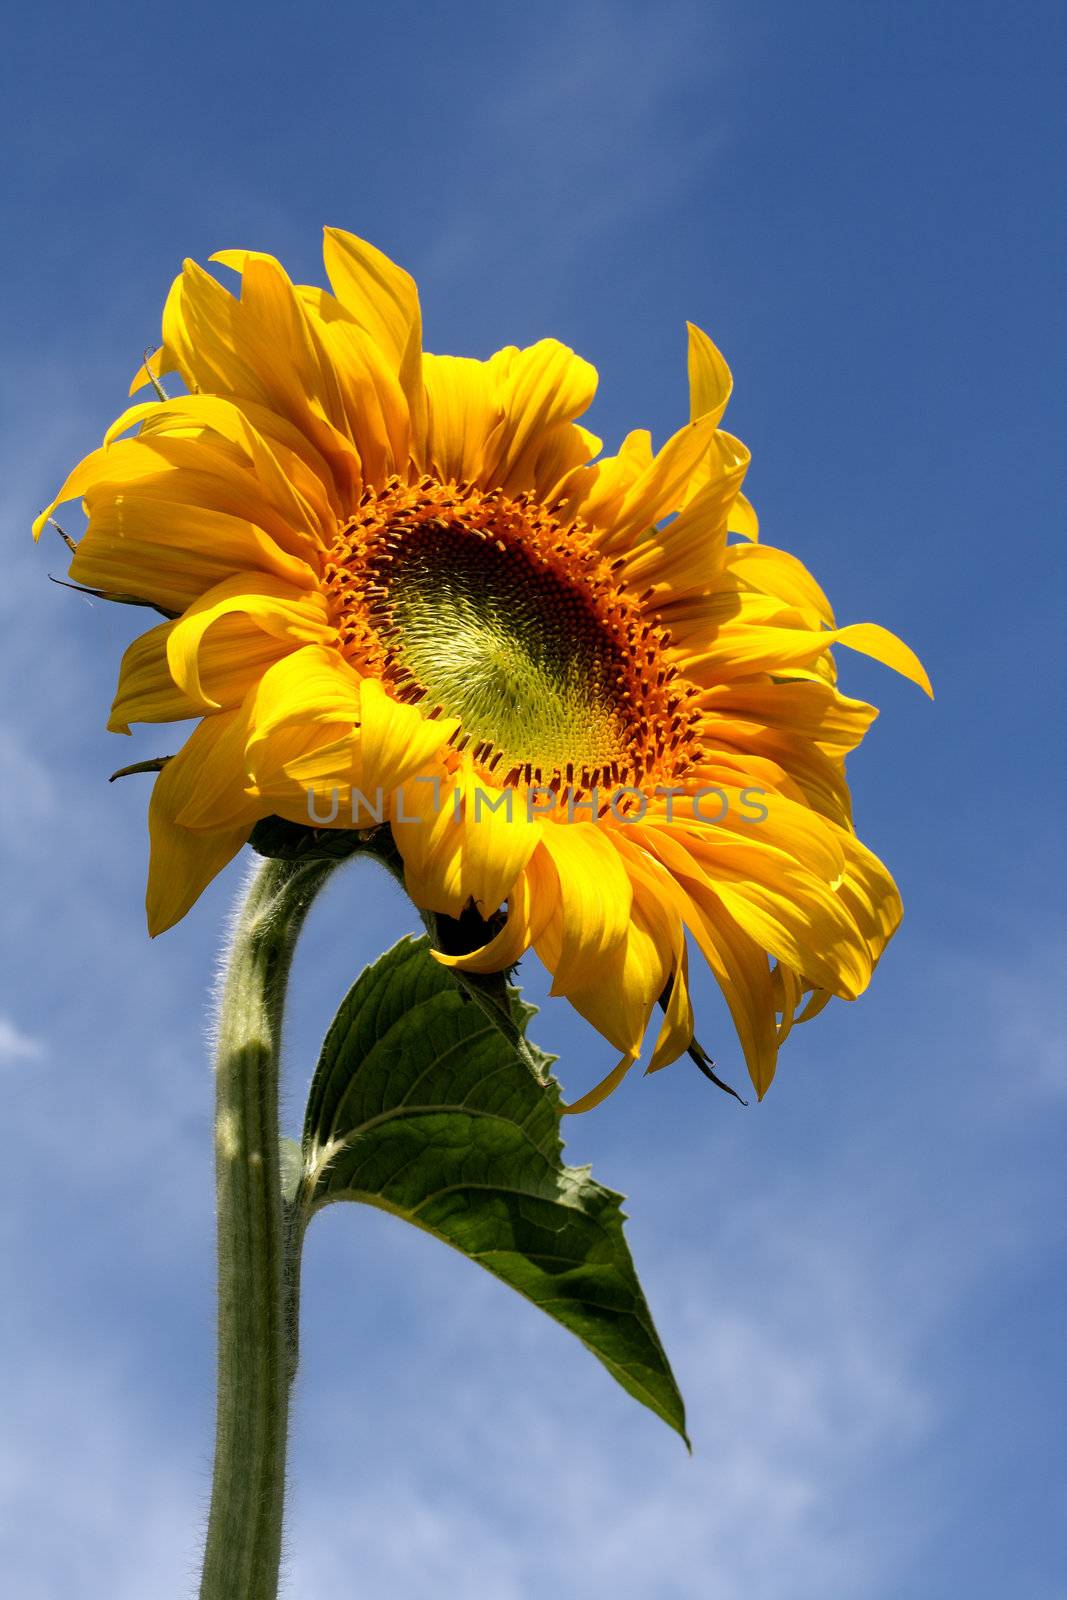 bright yellow sunflower under blue sky